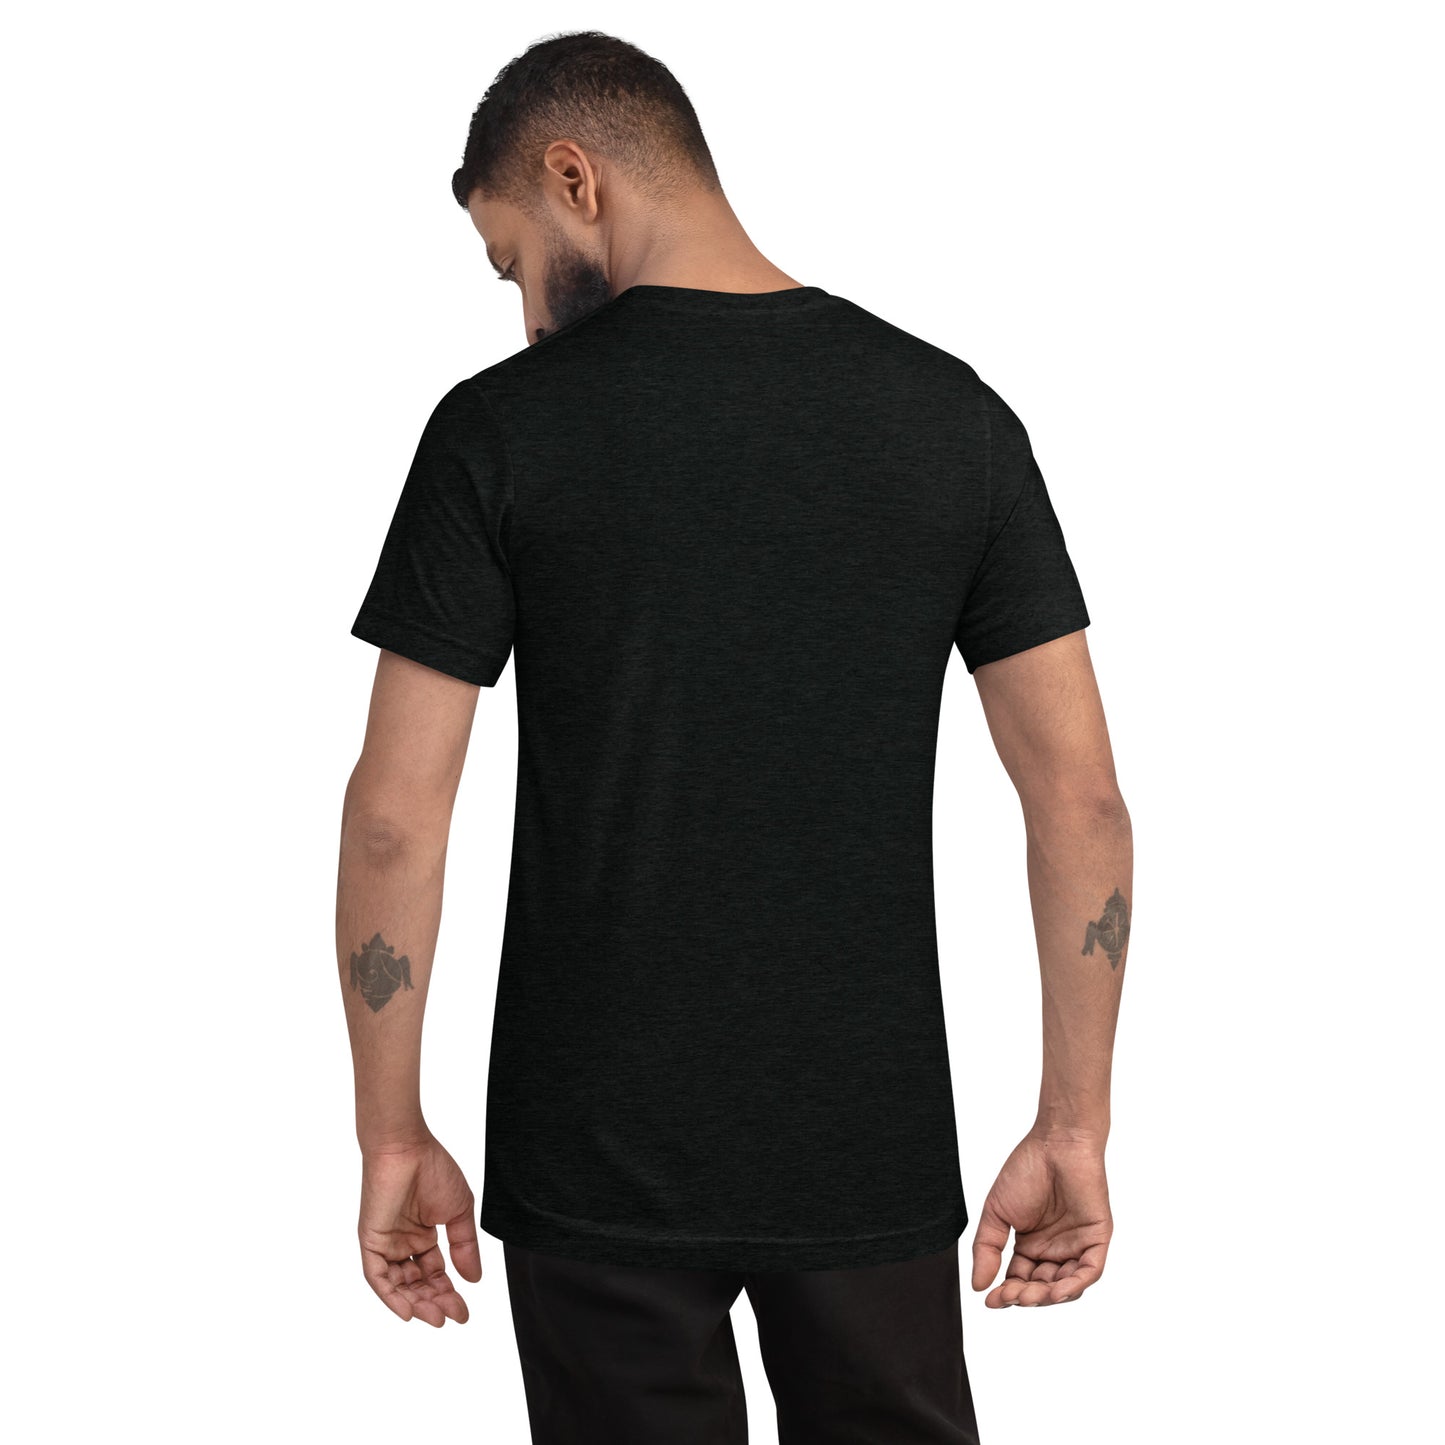 a man wearing a black t - shirt and black pants